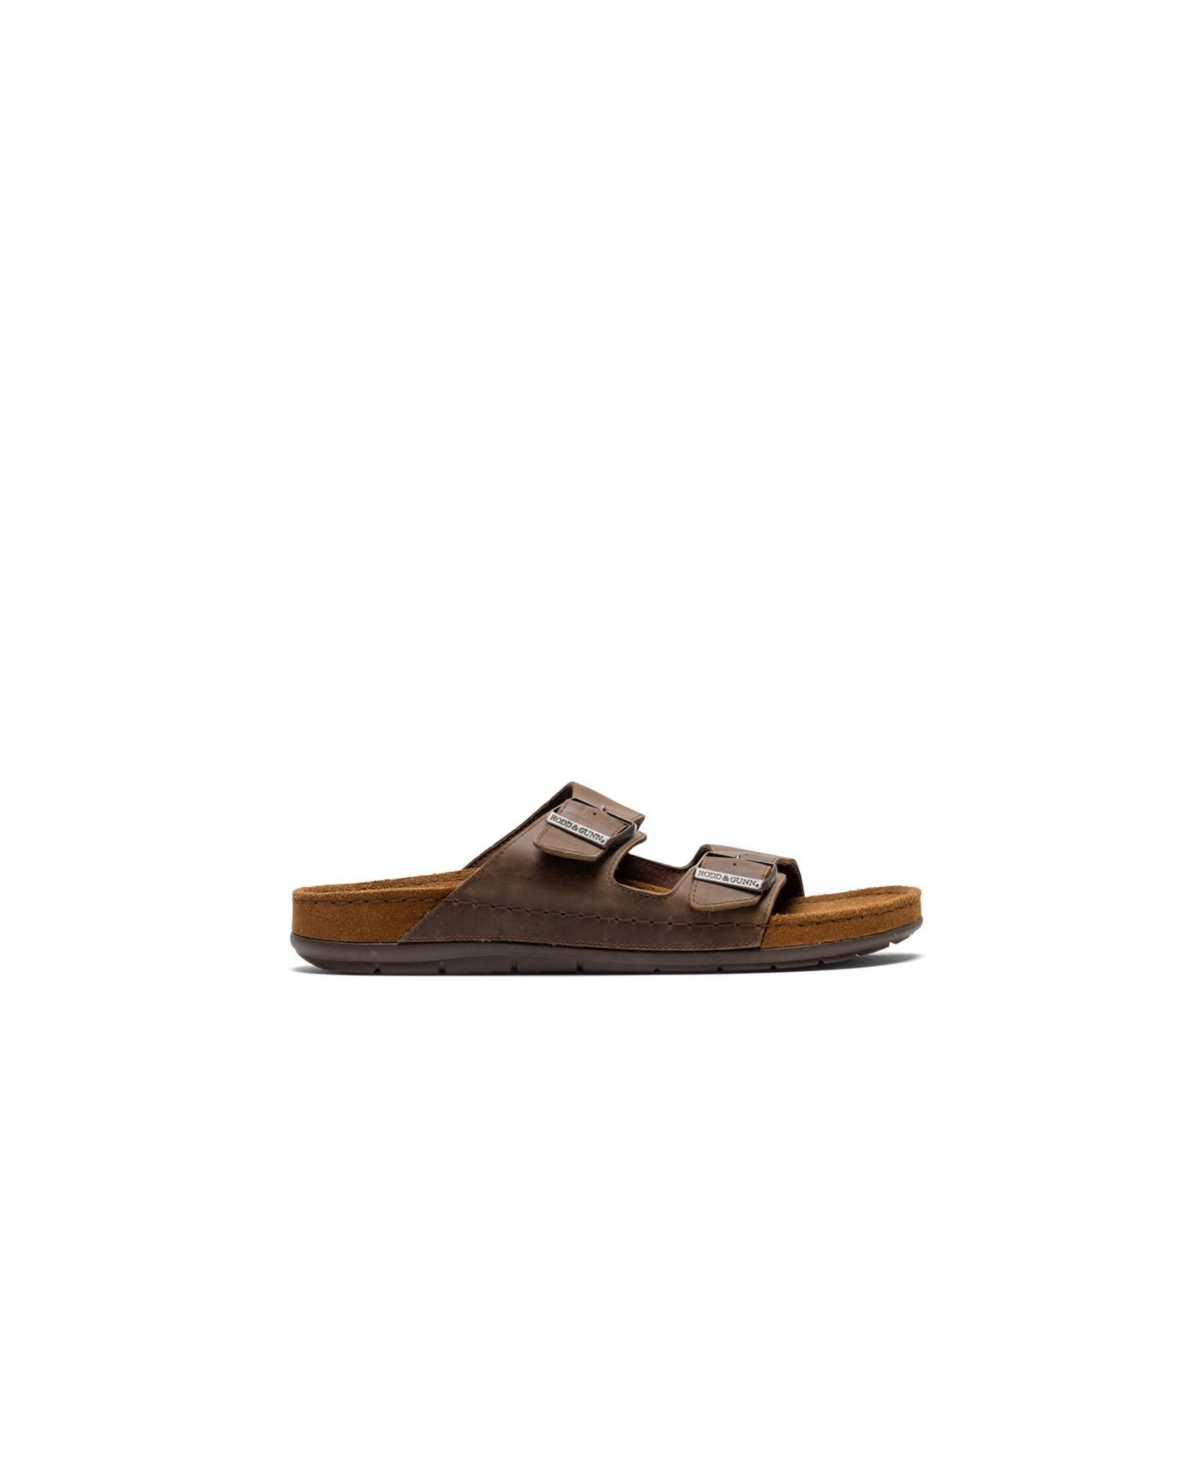 Men's Raglan Slide Sandal - Chocolate brown